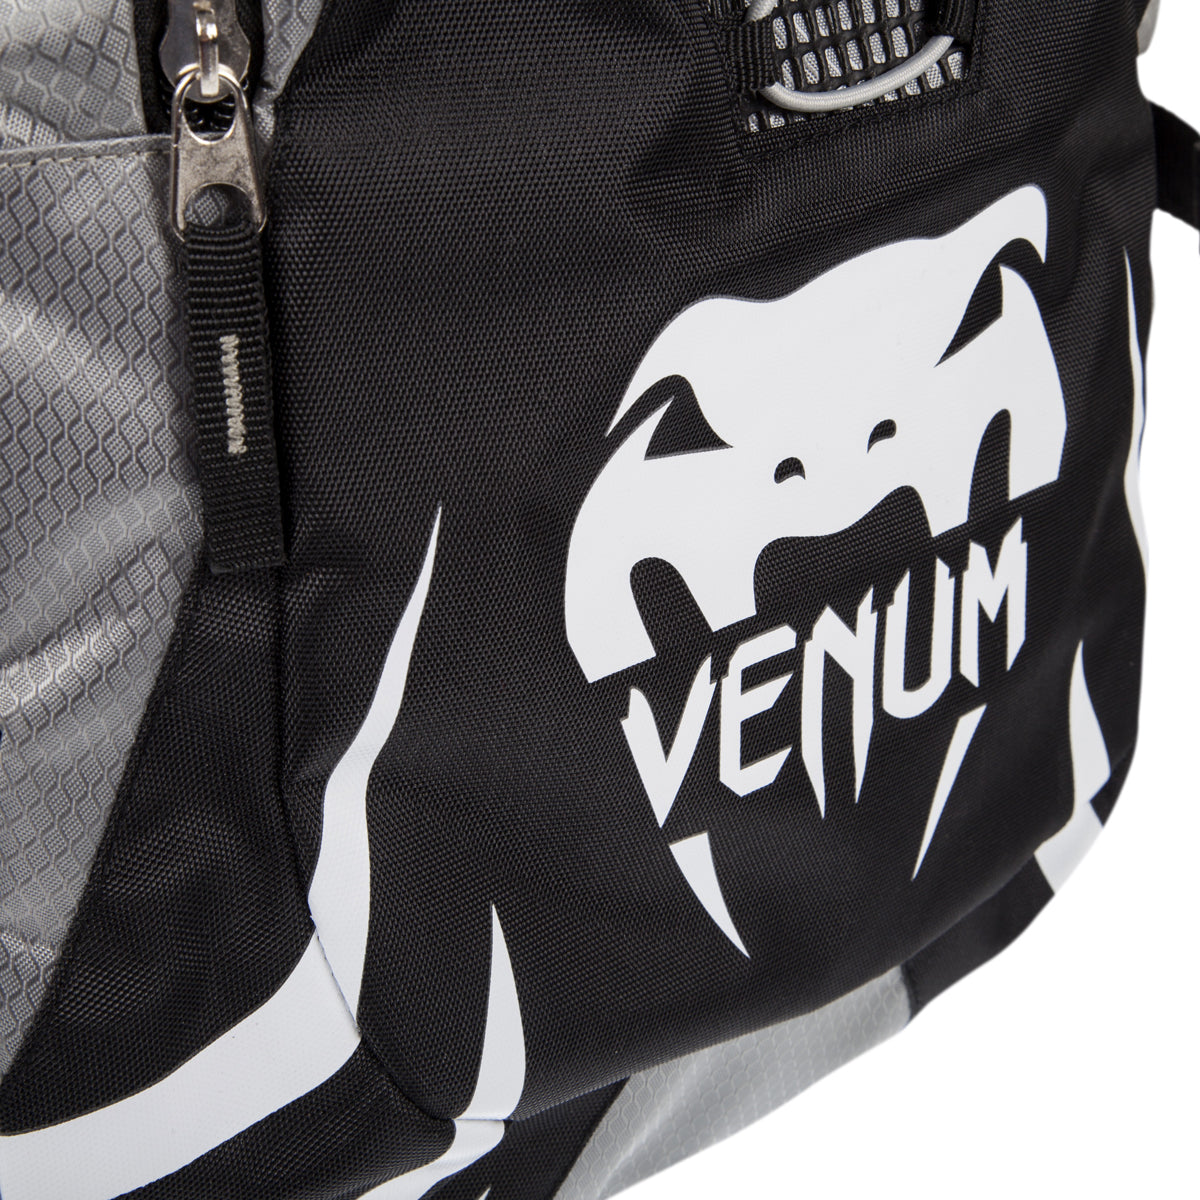 Venum Challenger Pro Backpack - Black/Gray Venum